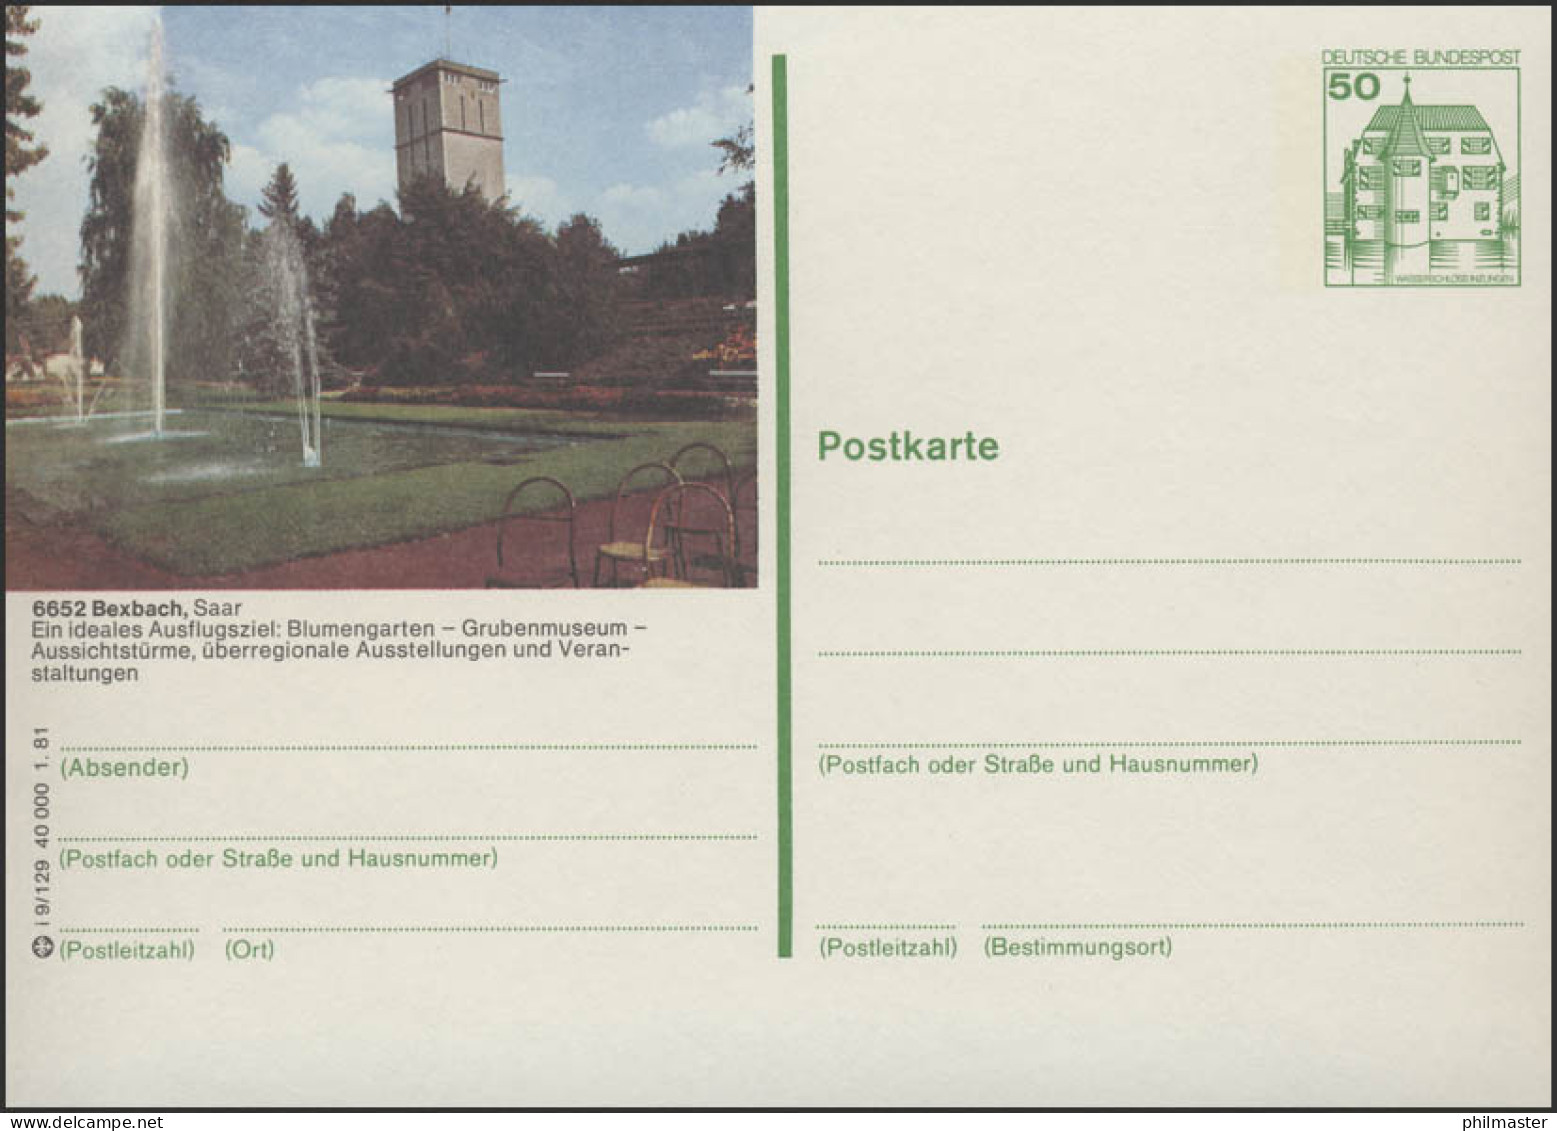 P134-i9/129 - 6652 Bexbach - Blumengarten Grubenmuseum ** - Illustrated Postcards - Mint